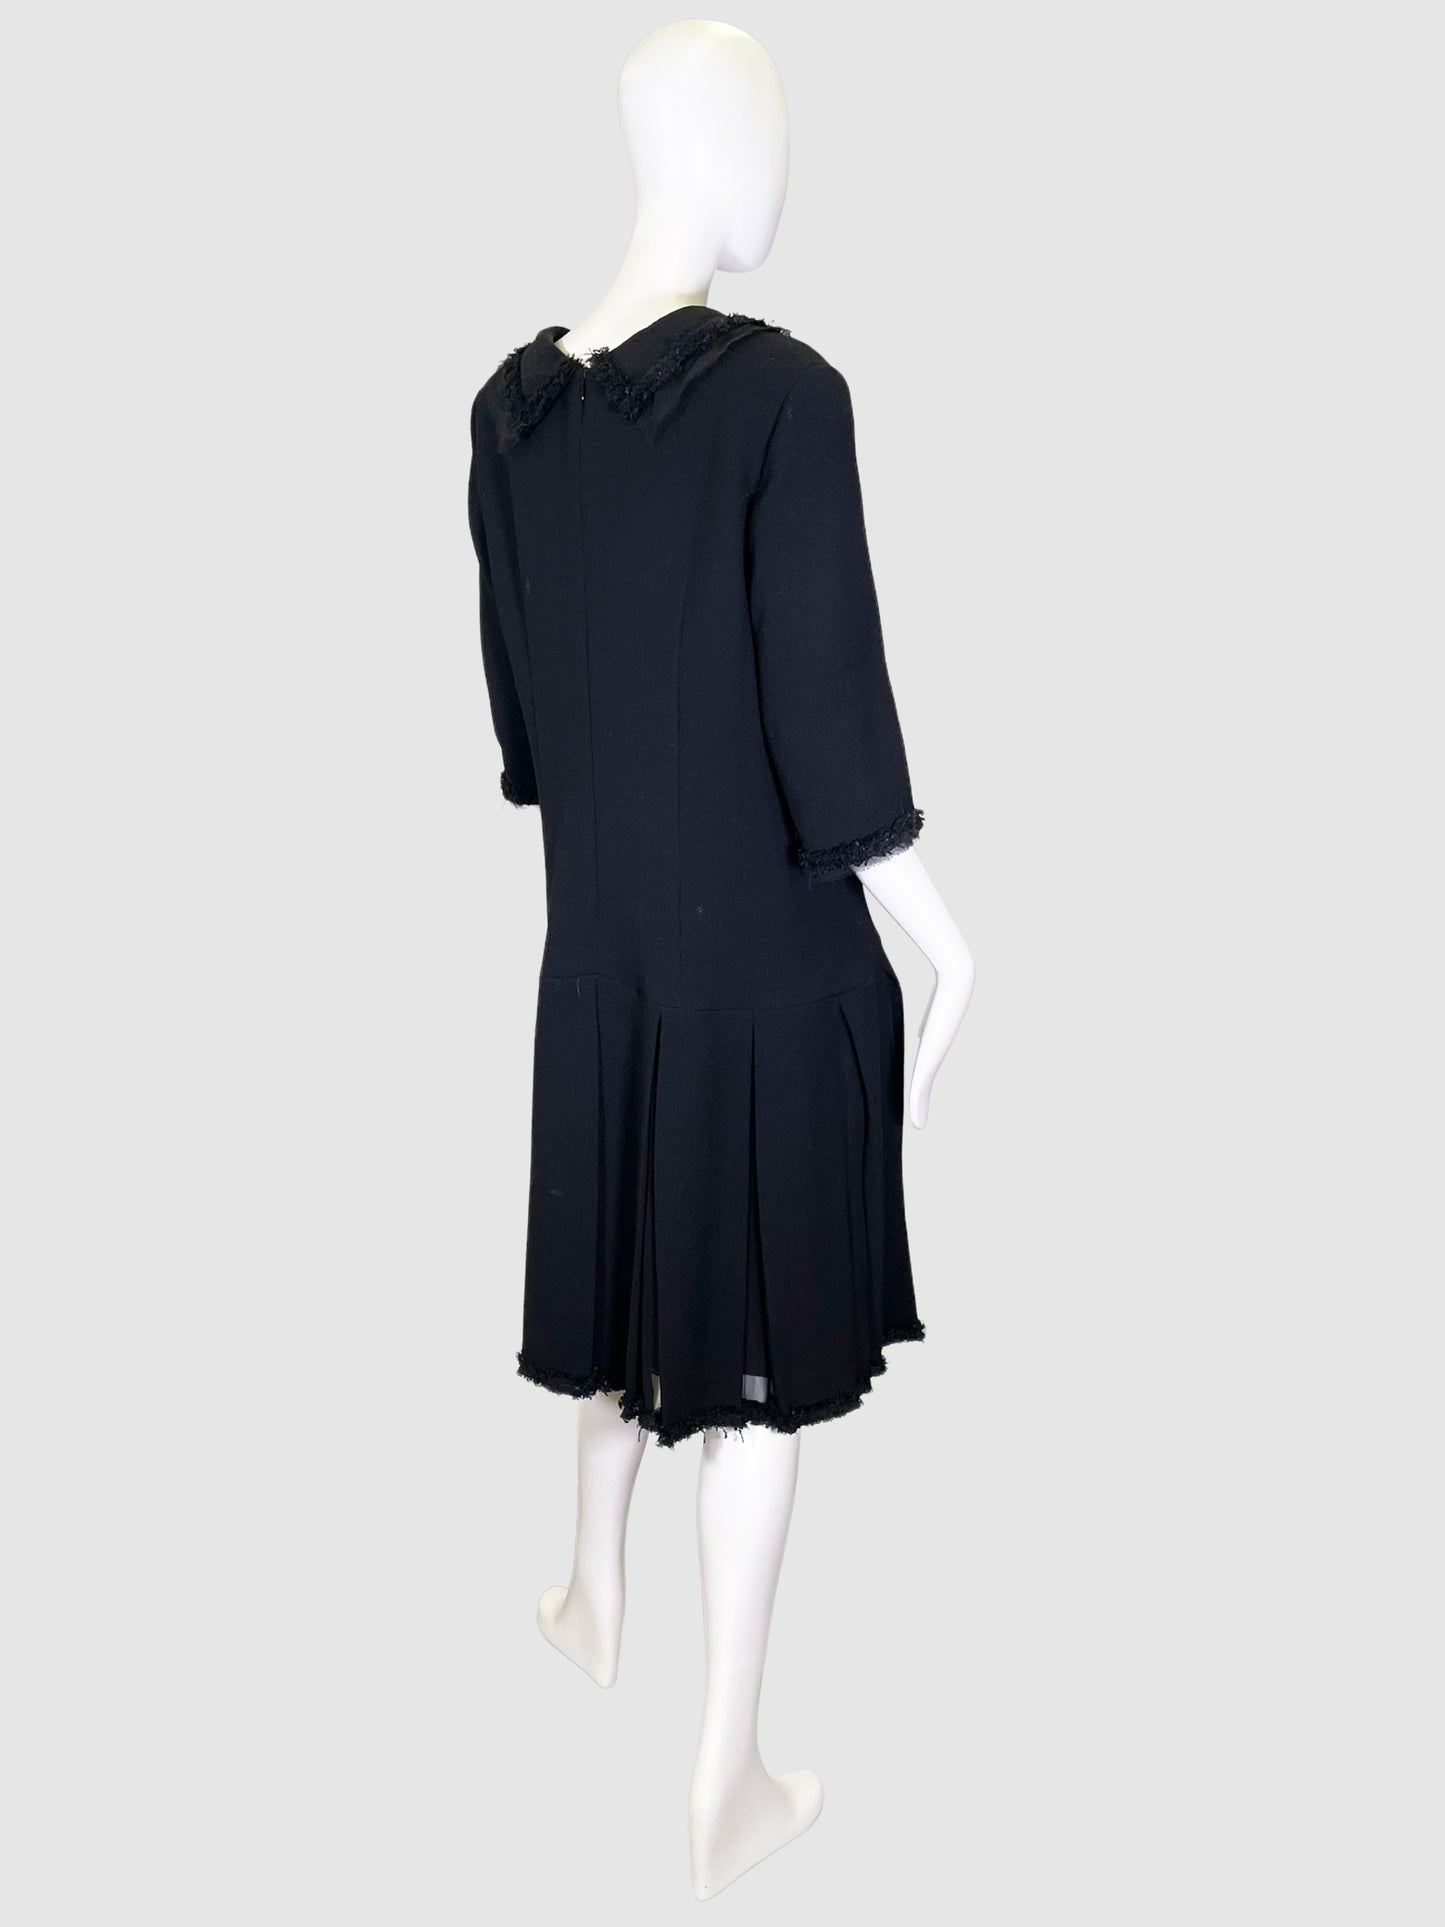 Oscar de la Renta Collared Wool Midi Dress - Size 14